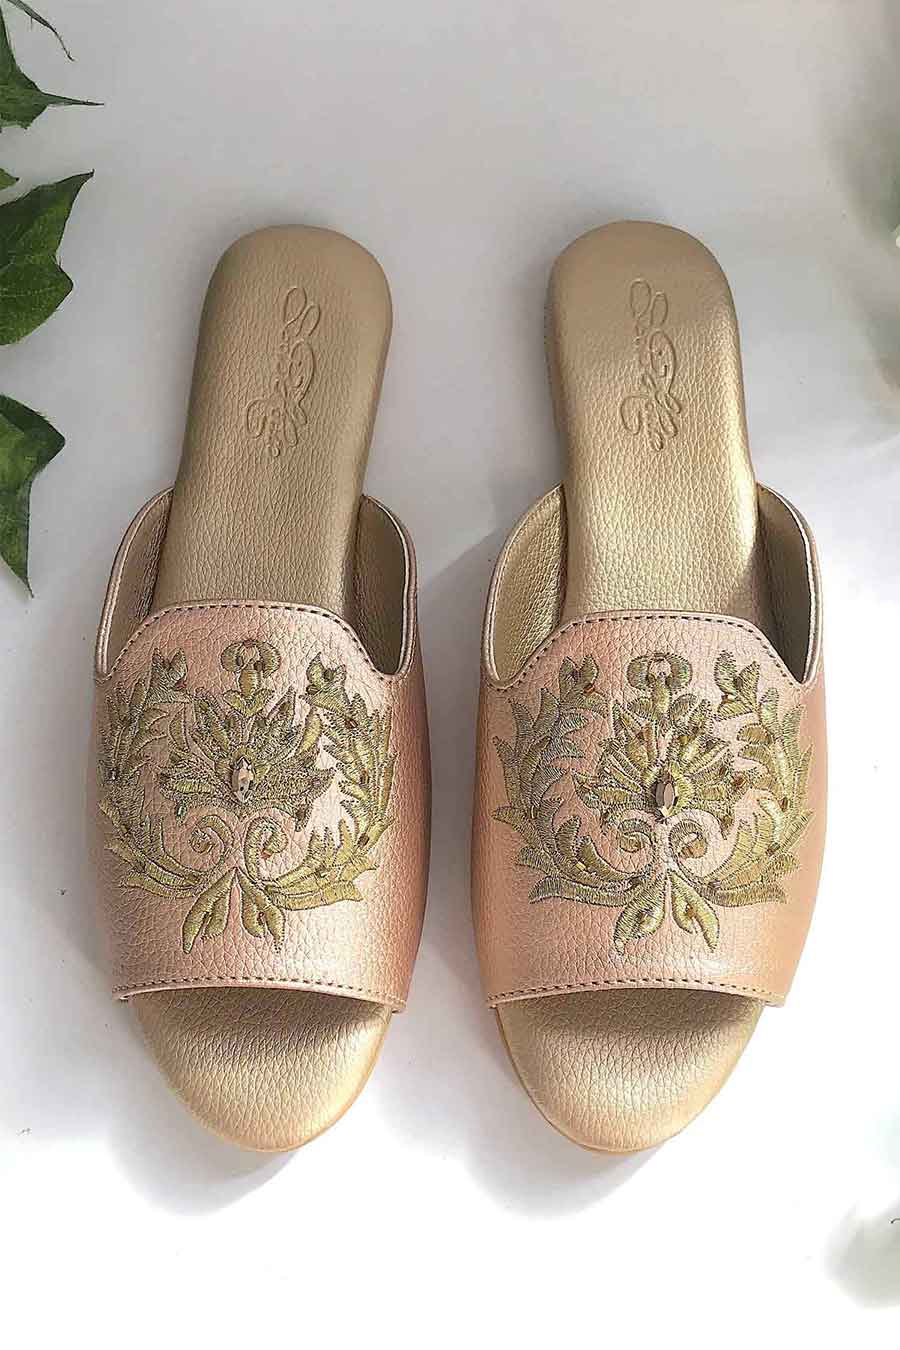 Damask Rose Gold Loafers